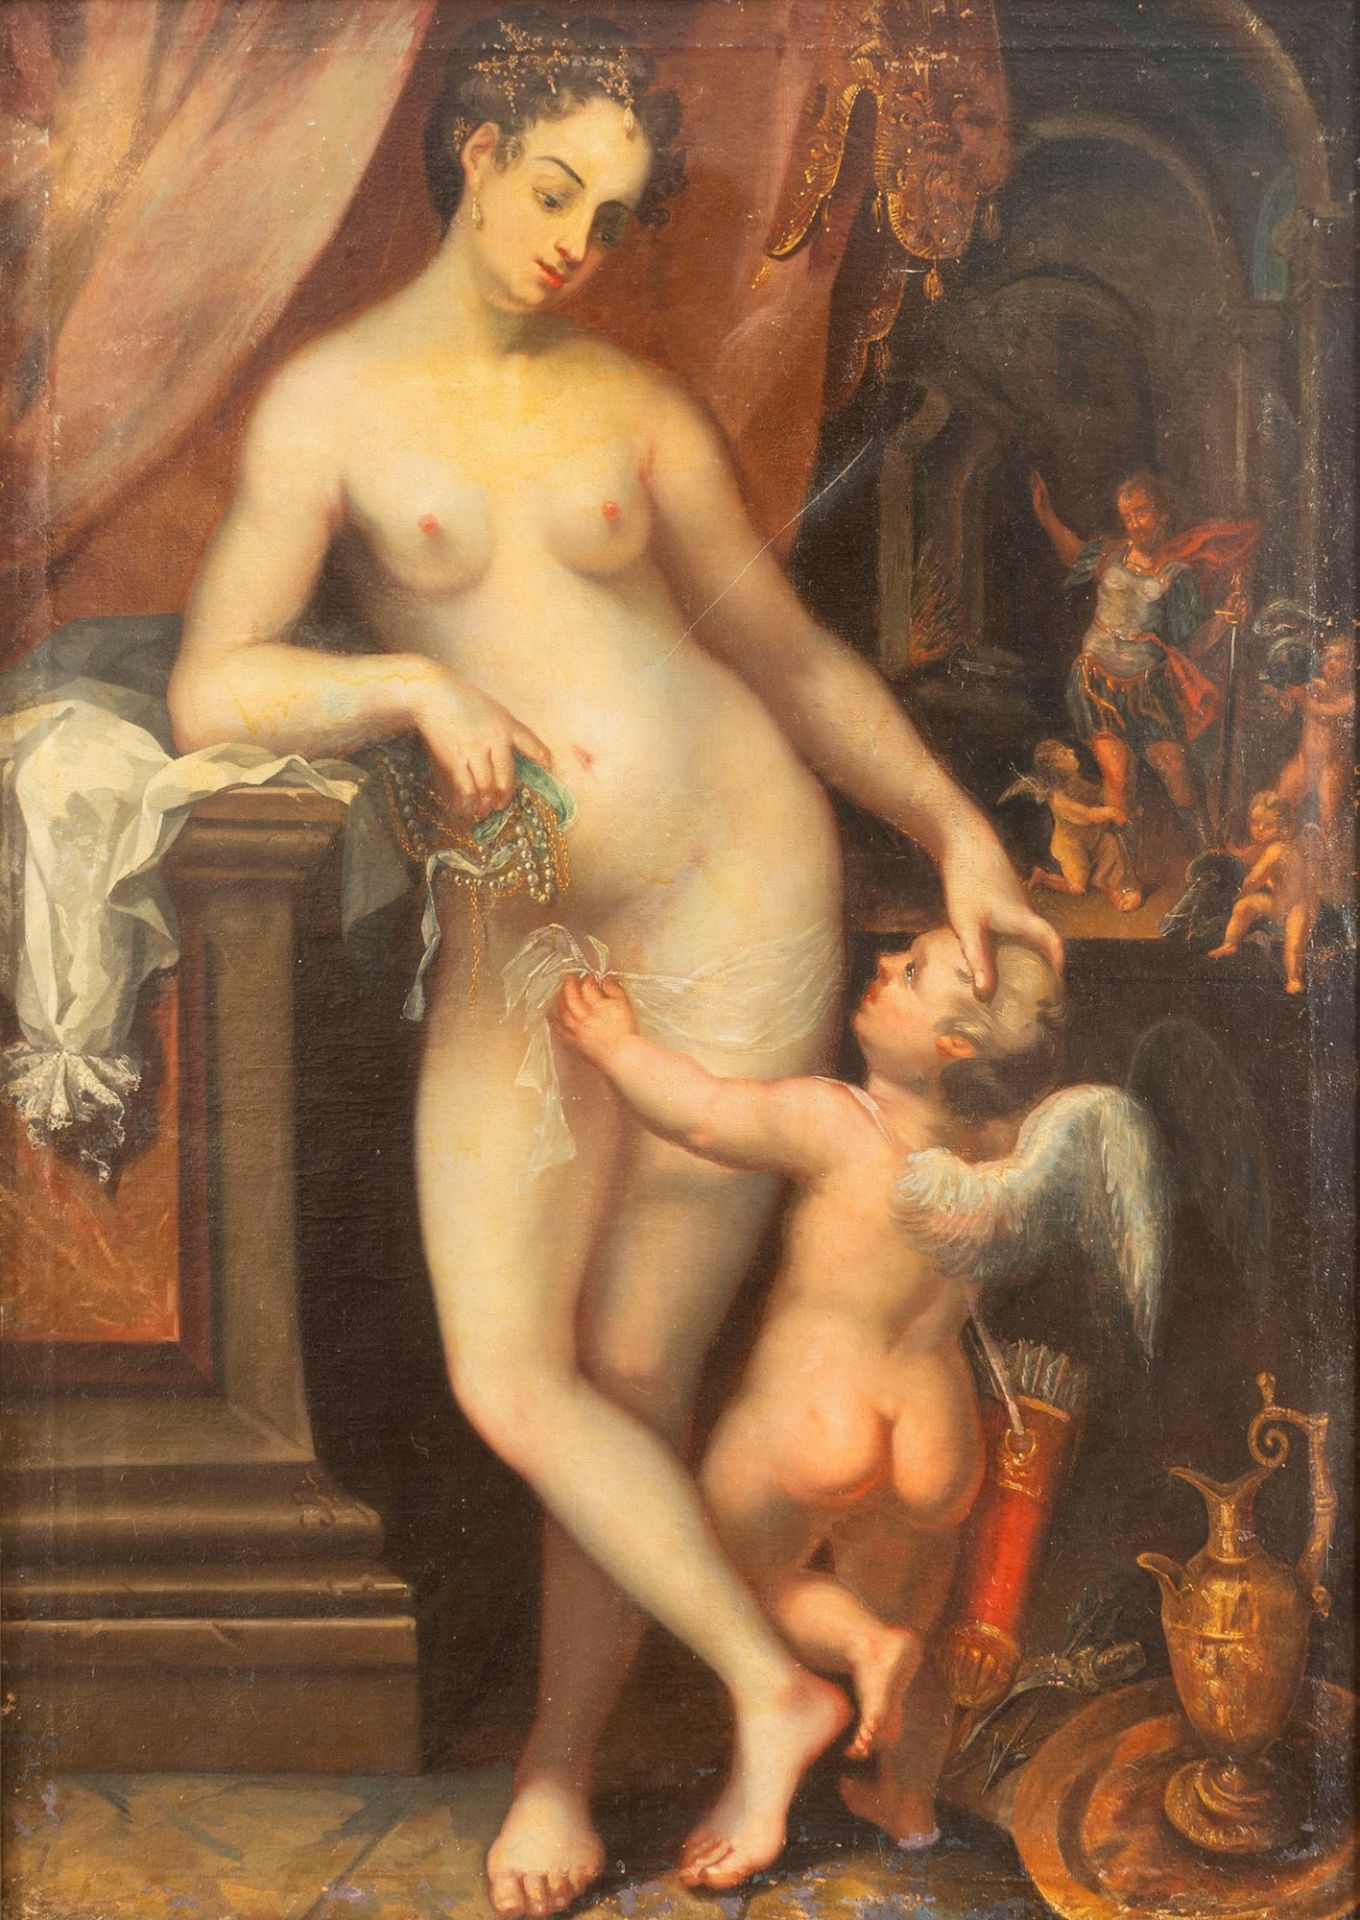 Flemish School, late sixteenth century - early seventeenth century - Venus, Mars and Cupid